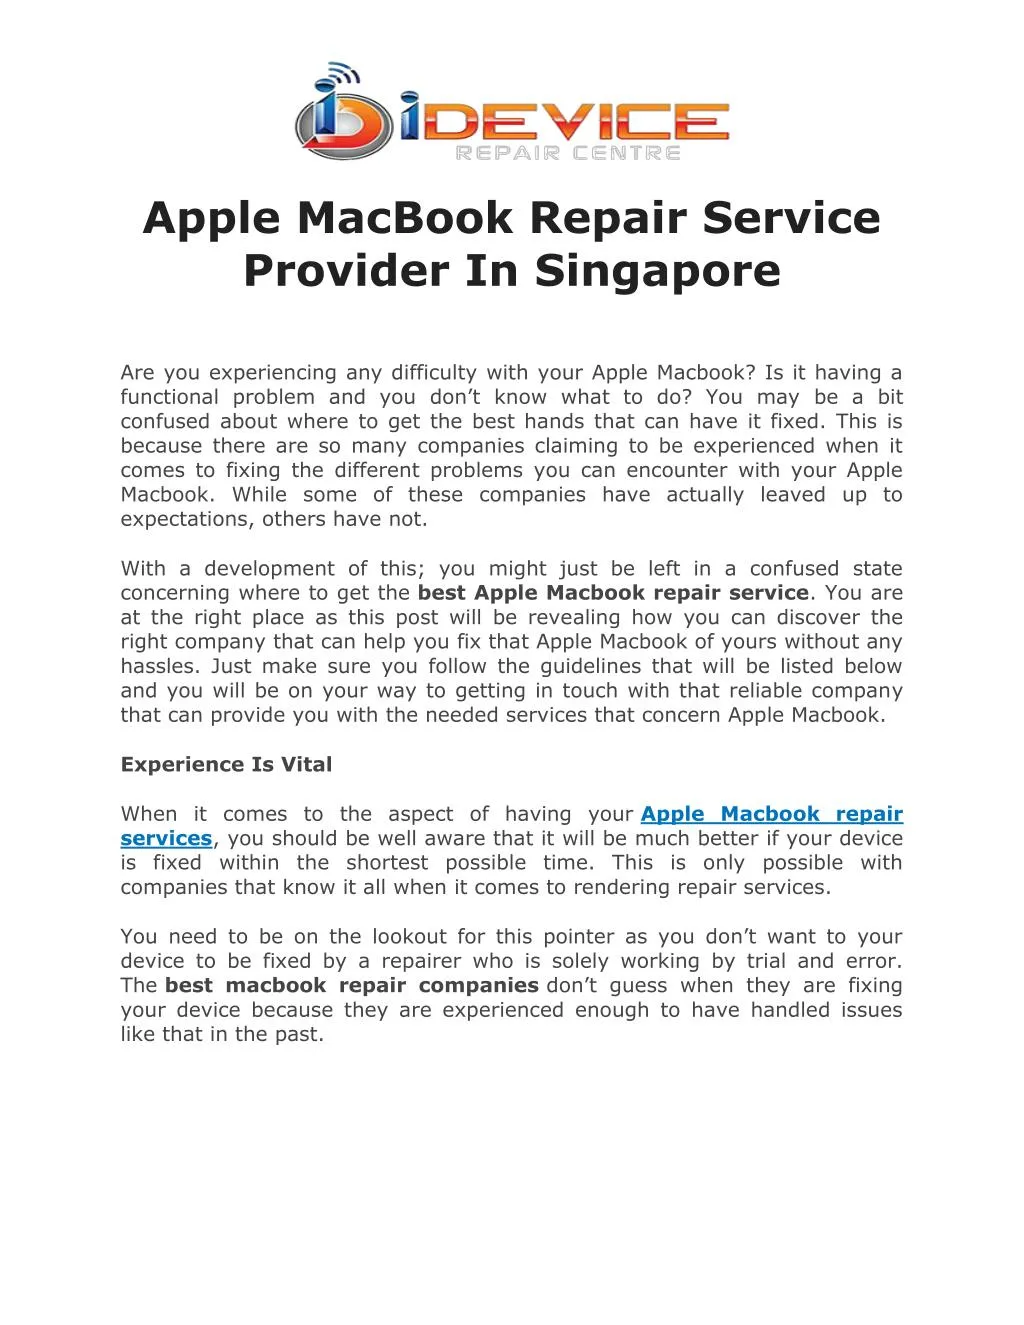 apple macbook repair service provider in singapore